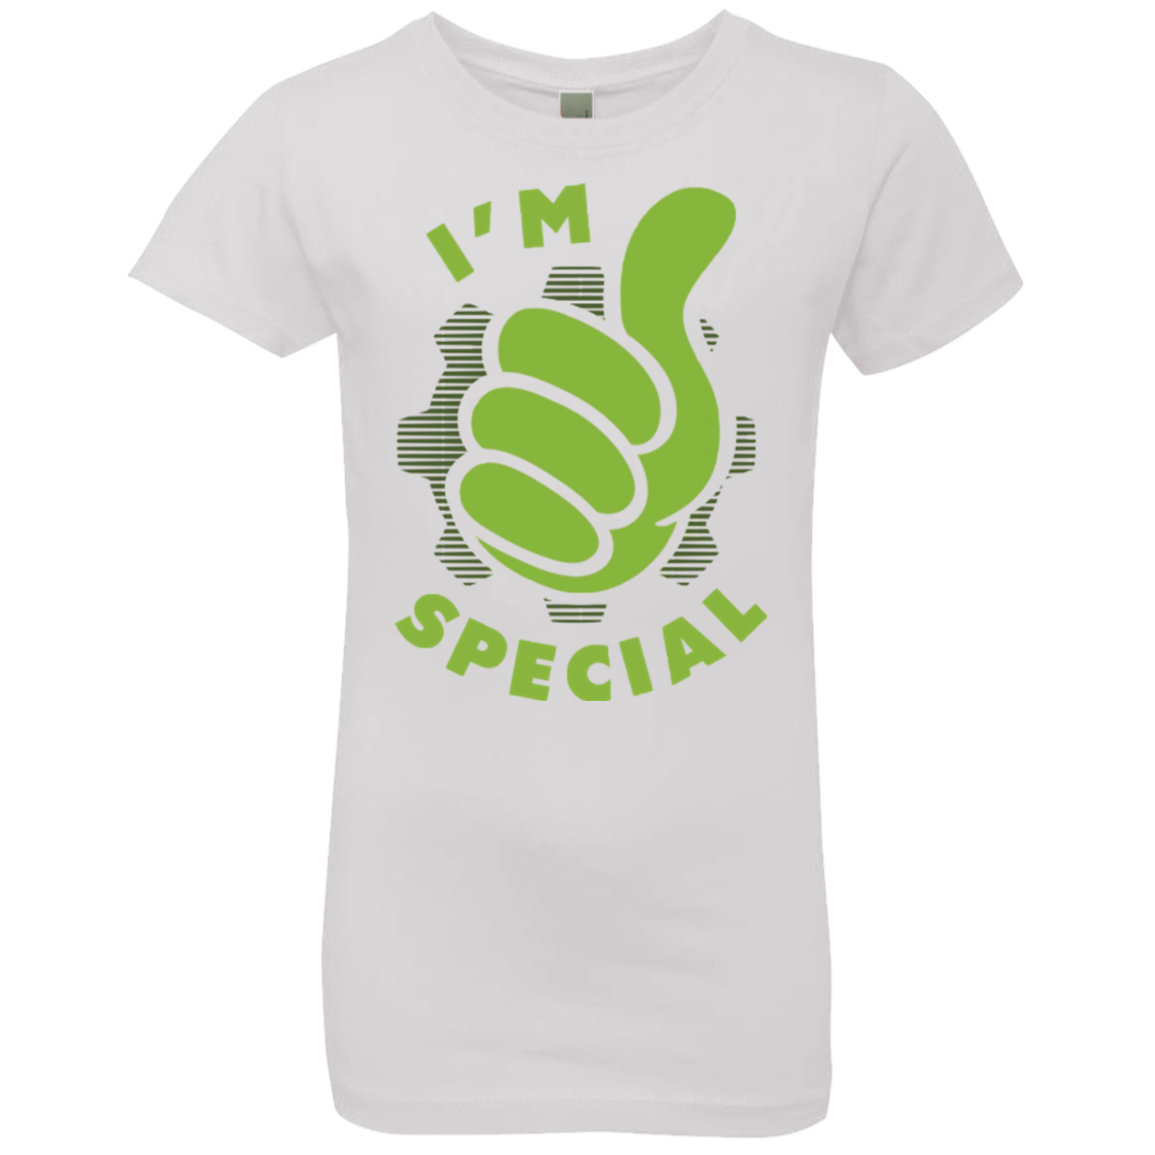 Special Dweller Girls Premium T-Shirt